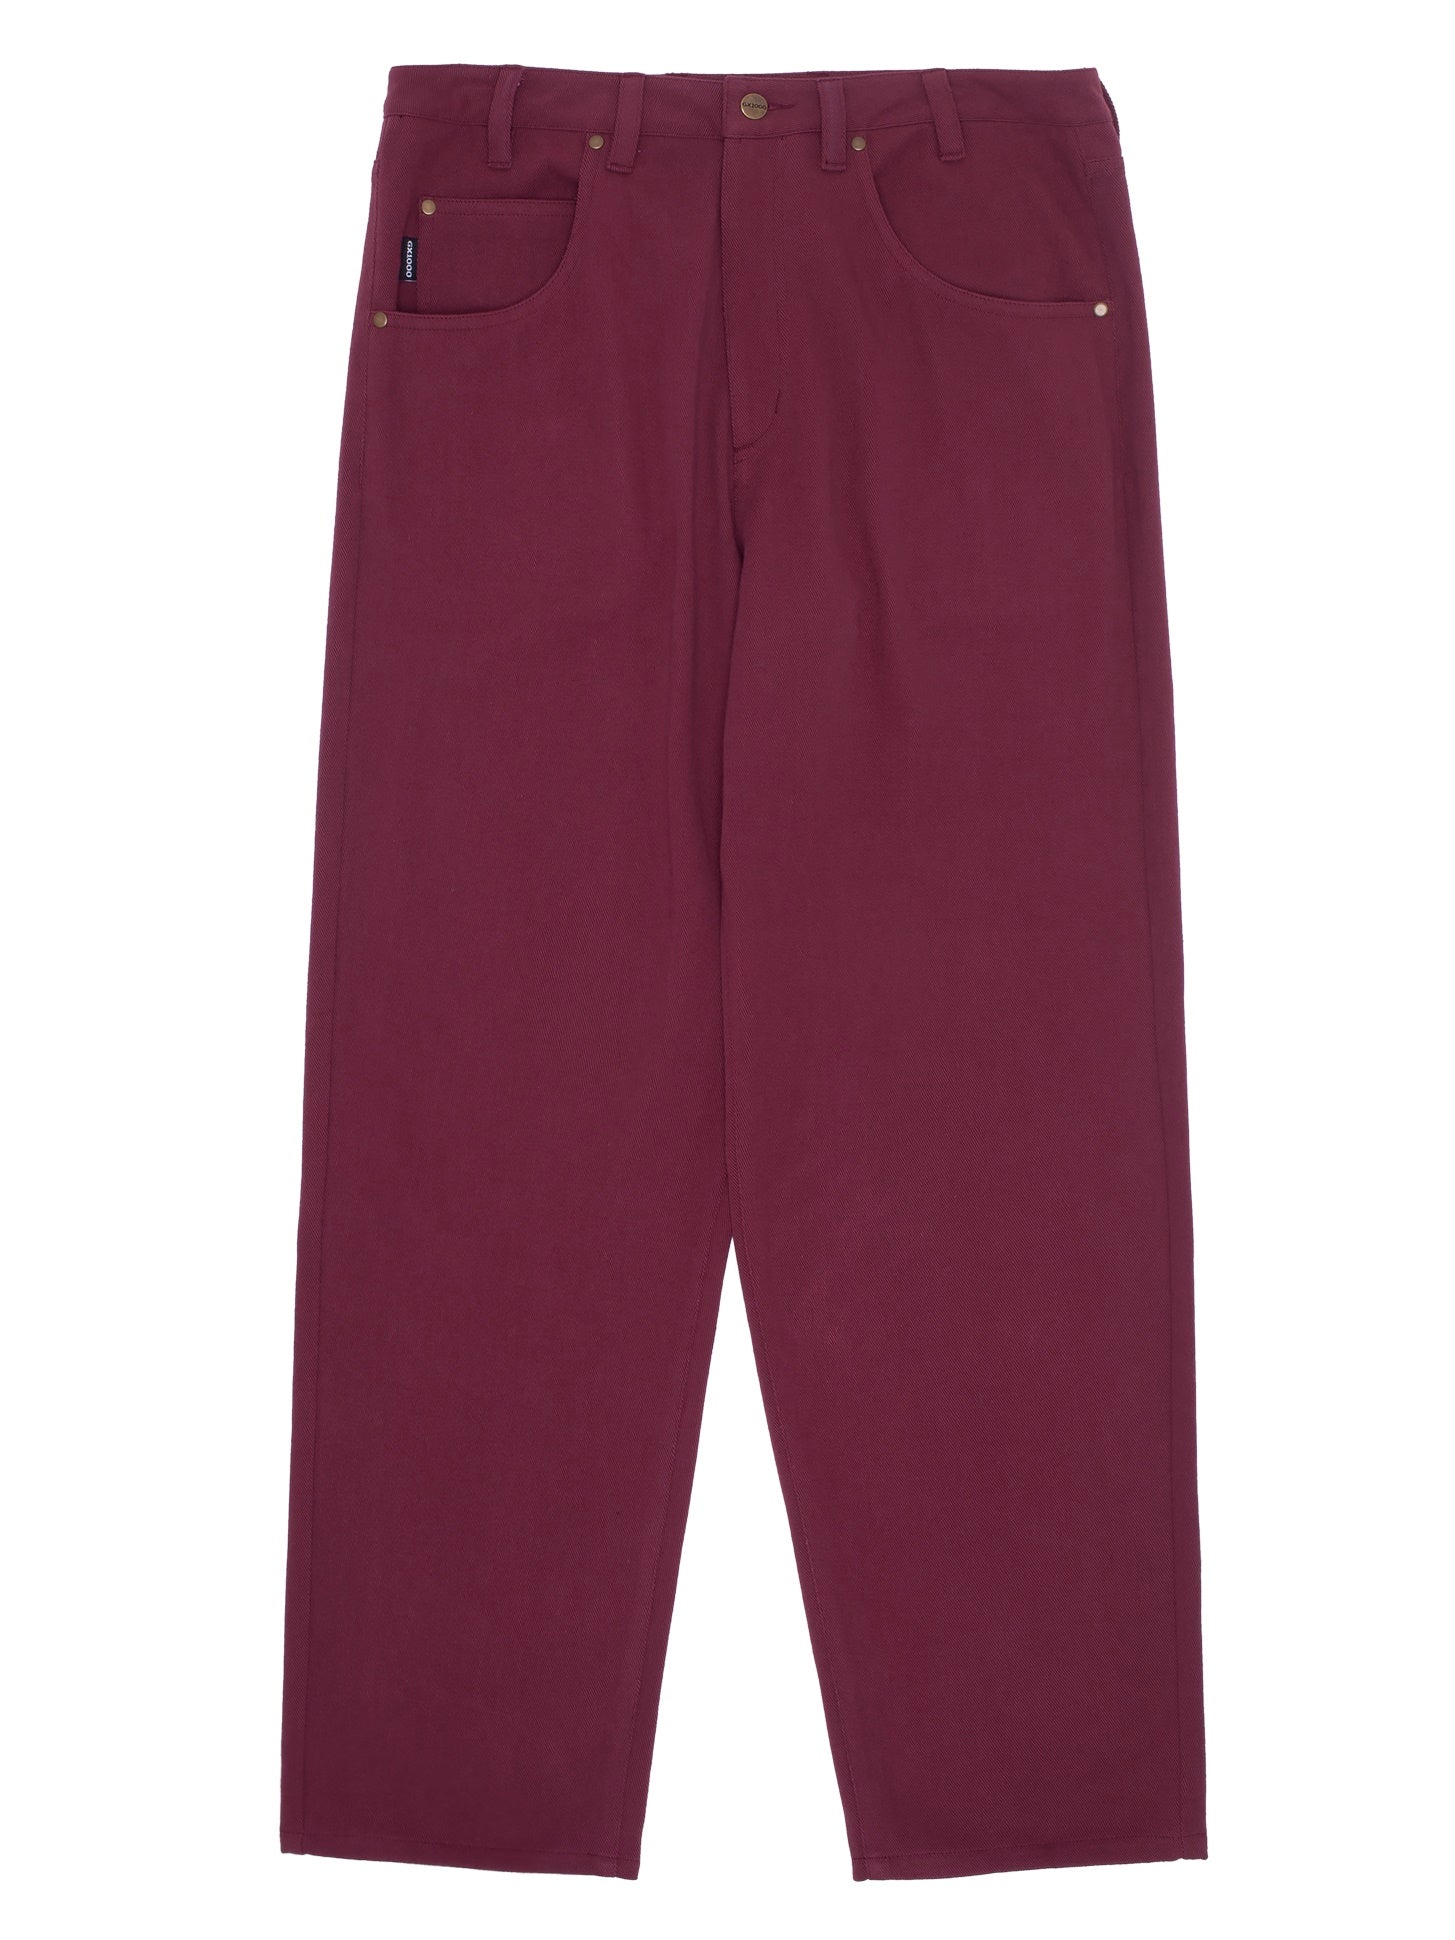 Women's Jeans Jeggings Five Pocket Stretch Denim Pants (Purple, Medium) 